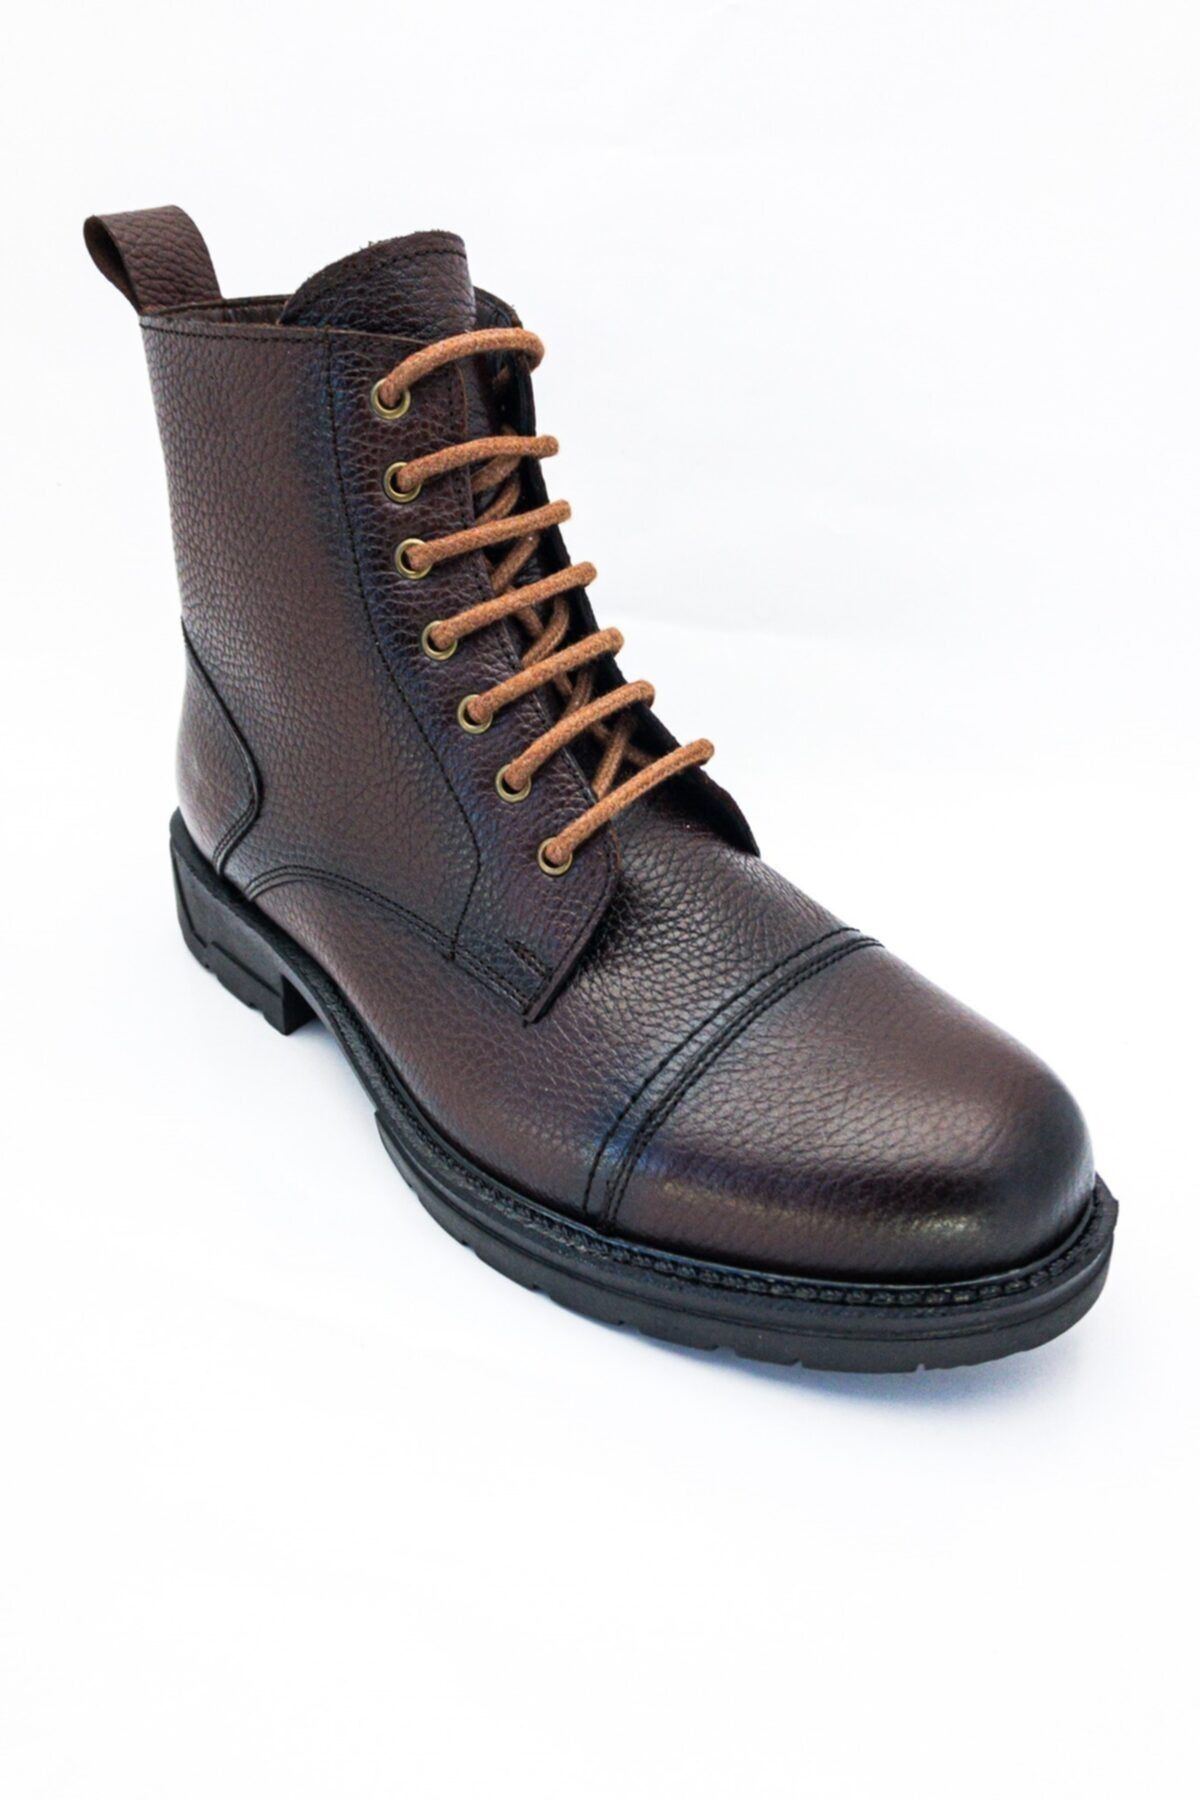 brunette Klasik Sneakers Kahverenk - Br1024 %100 Deri Ve El Işçiliği